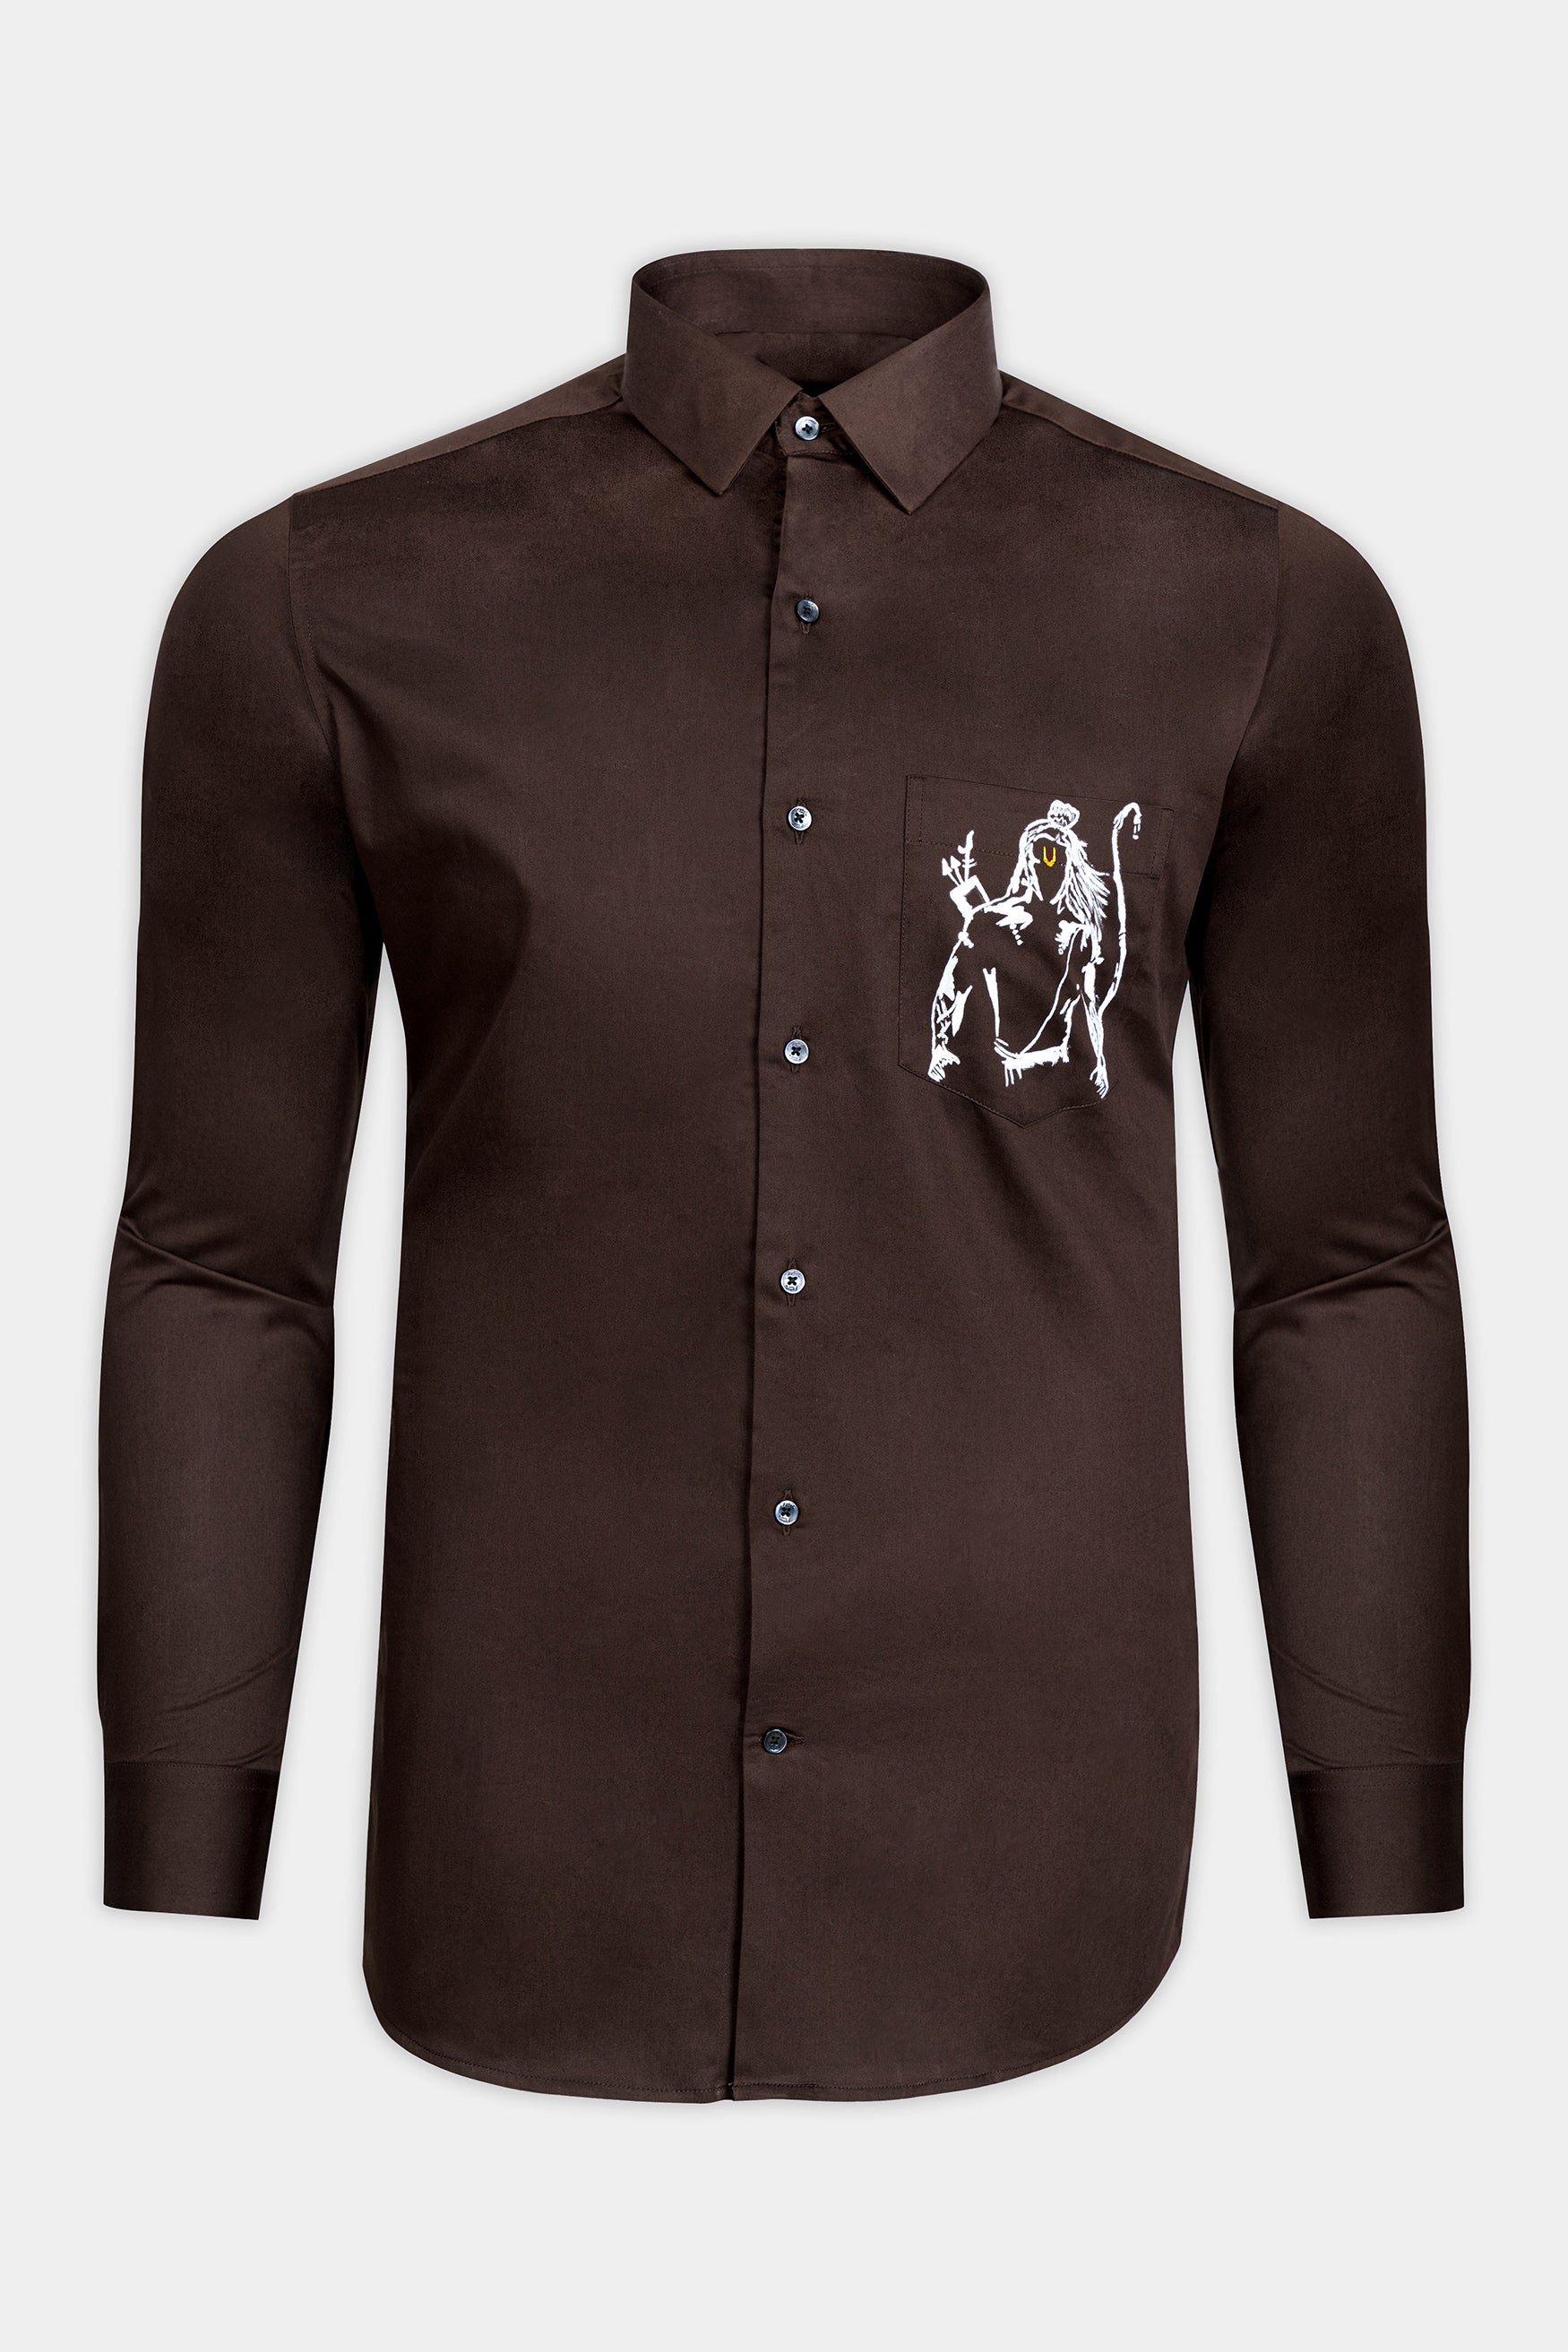 Acadia Brown Lord Ram Hand Painted Subtle Sheen Super Soft Premium Cotton Designer Shirt